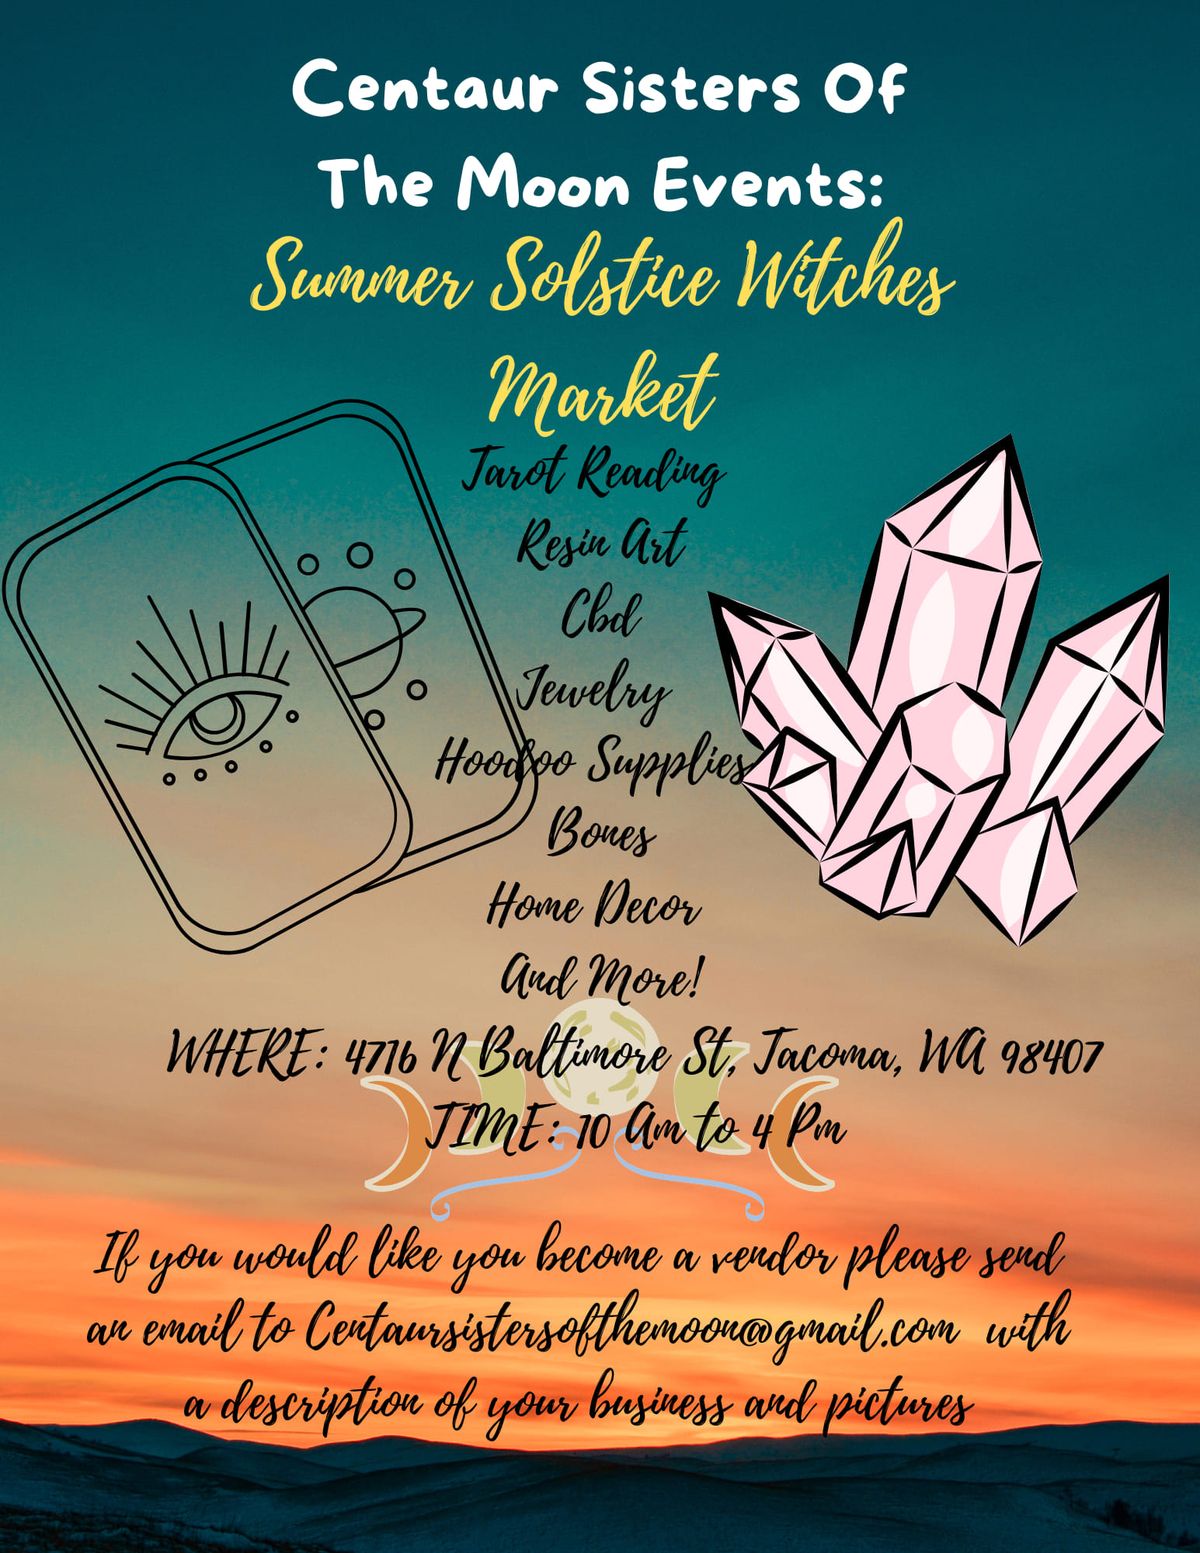 Summer Solstice Witches Market